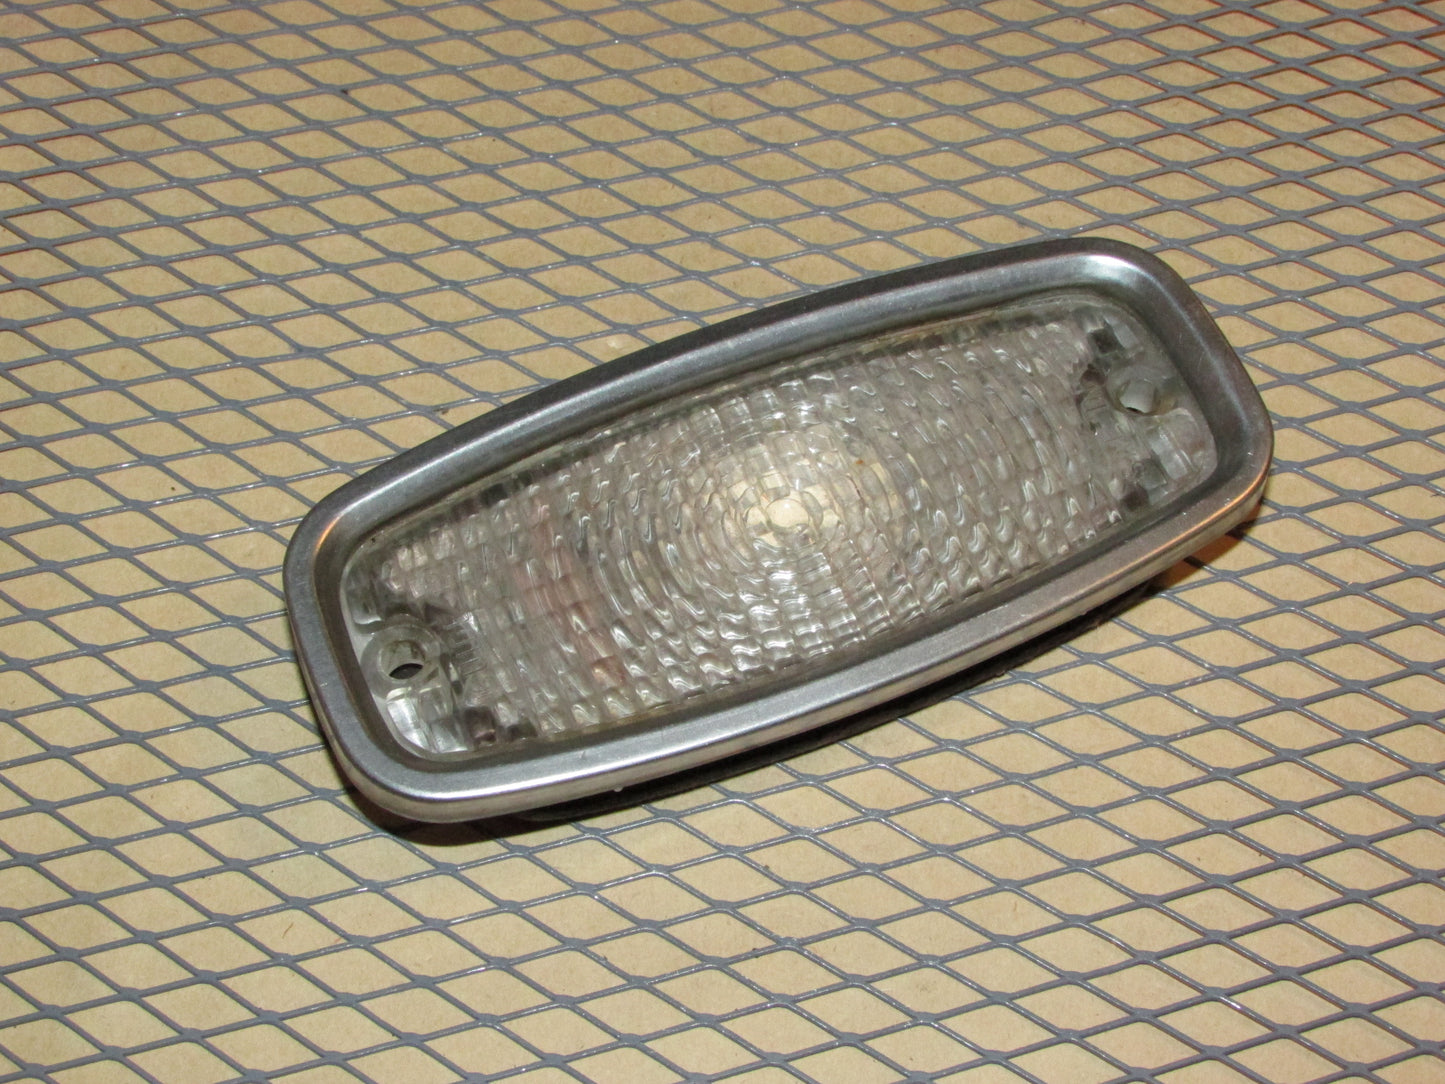 68 Chevrolet Camaro OEM Front Turn Signal Light Lamp